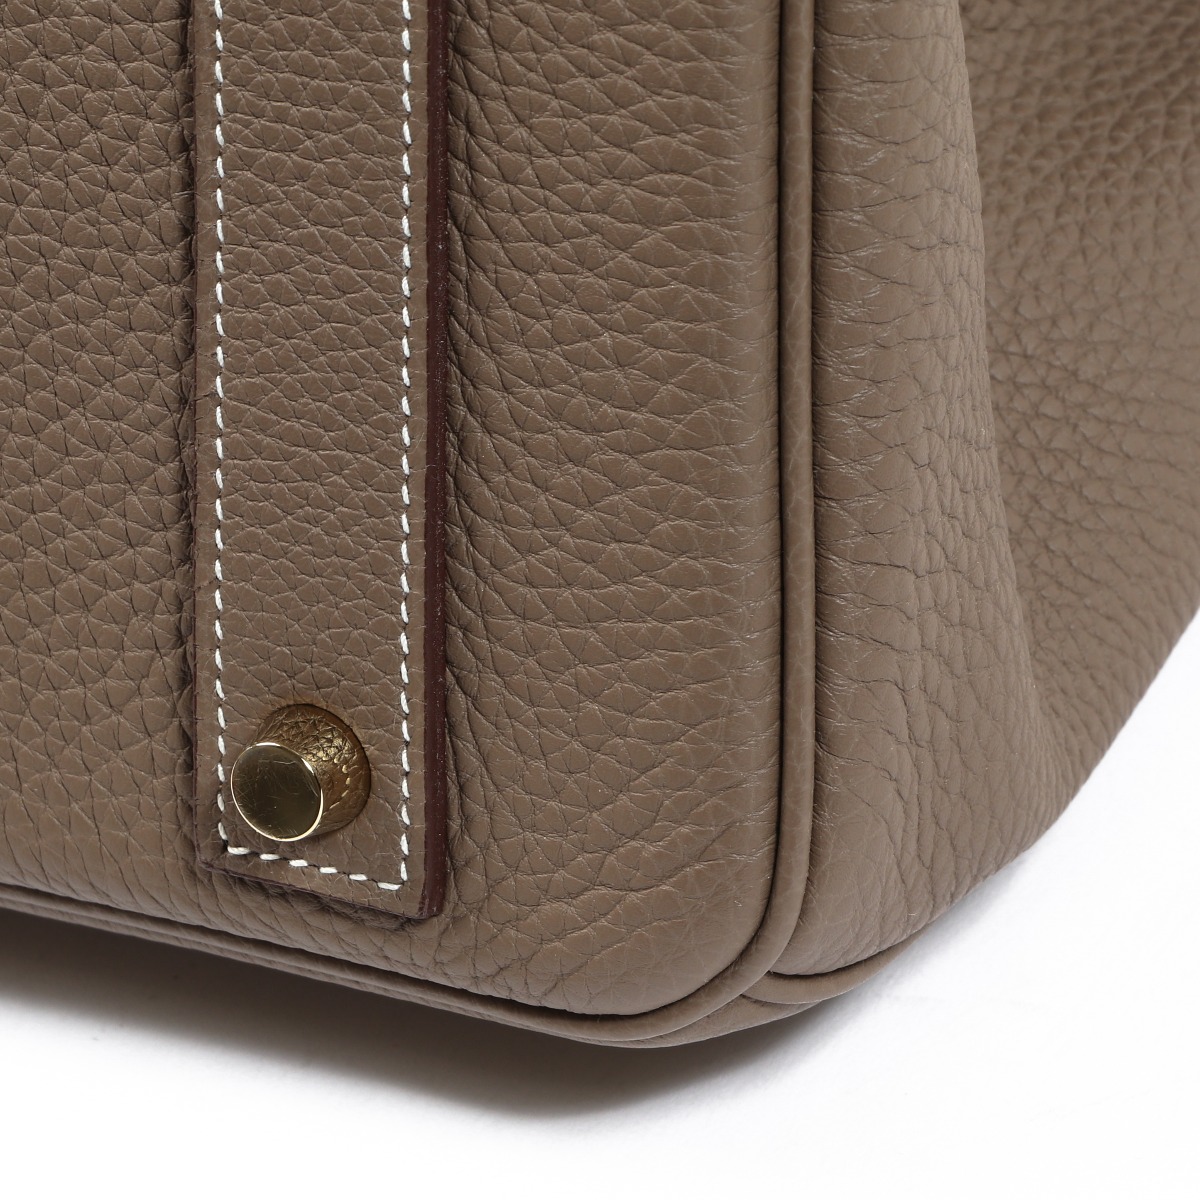 Hermès Birkin 40 Bag Etoupe Togo Taupe Leather